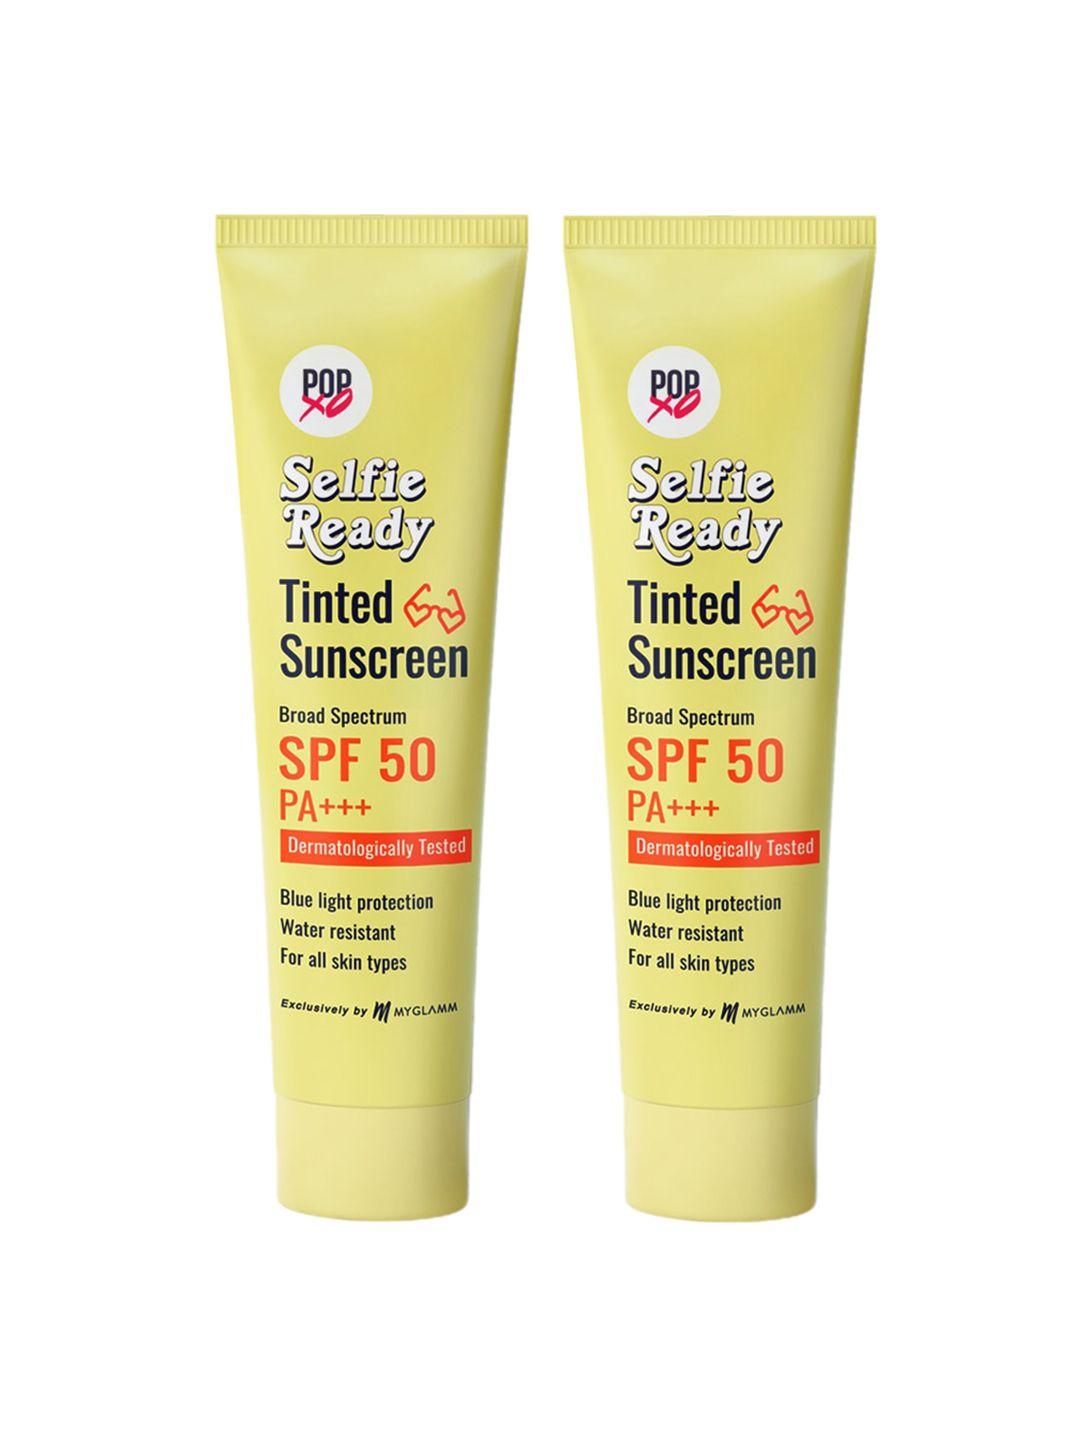 myglamm set of 2 popxo selfie-ready tinted sunscreen spf 50 - 30 g each